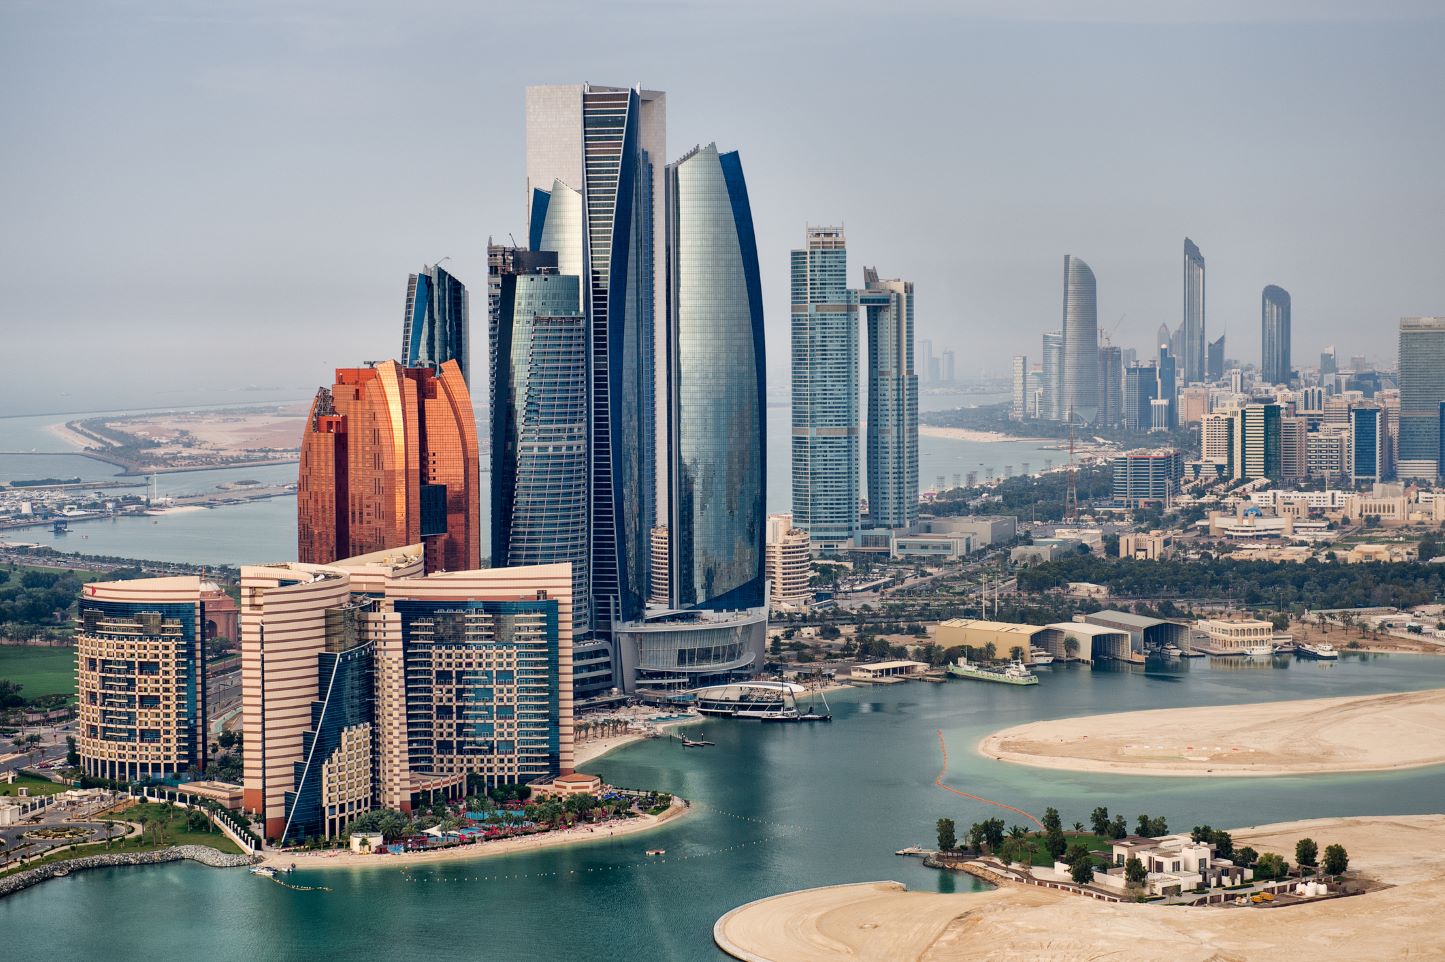 A view of Abu Dhabi